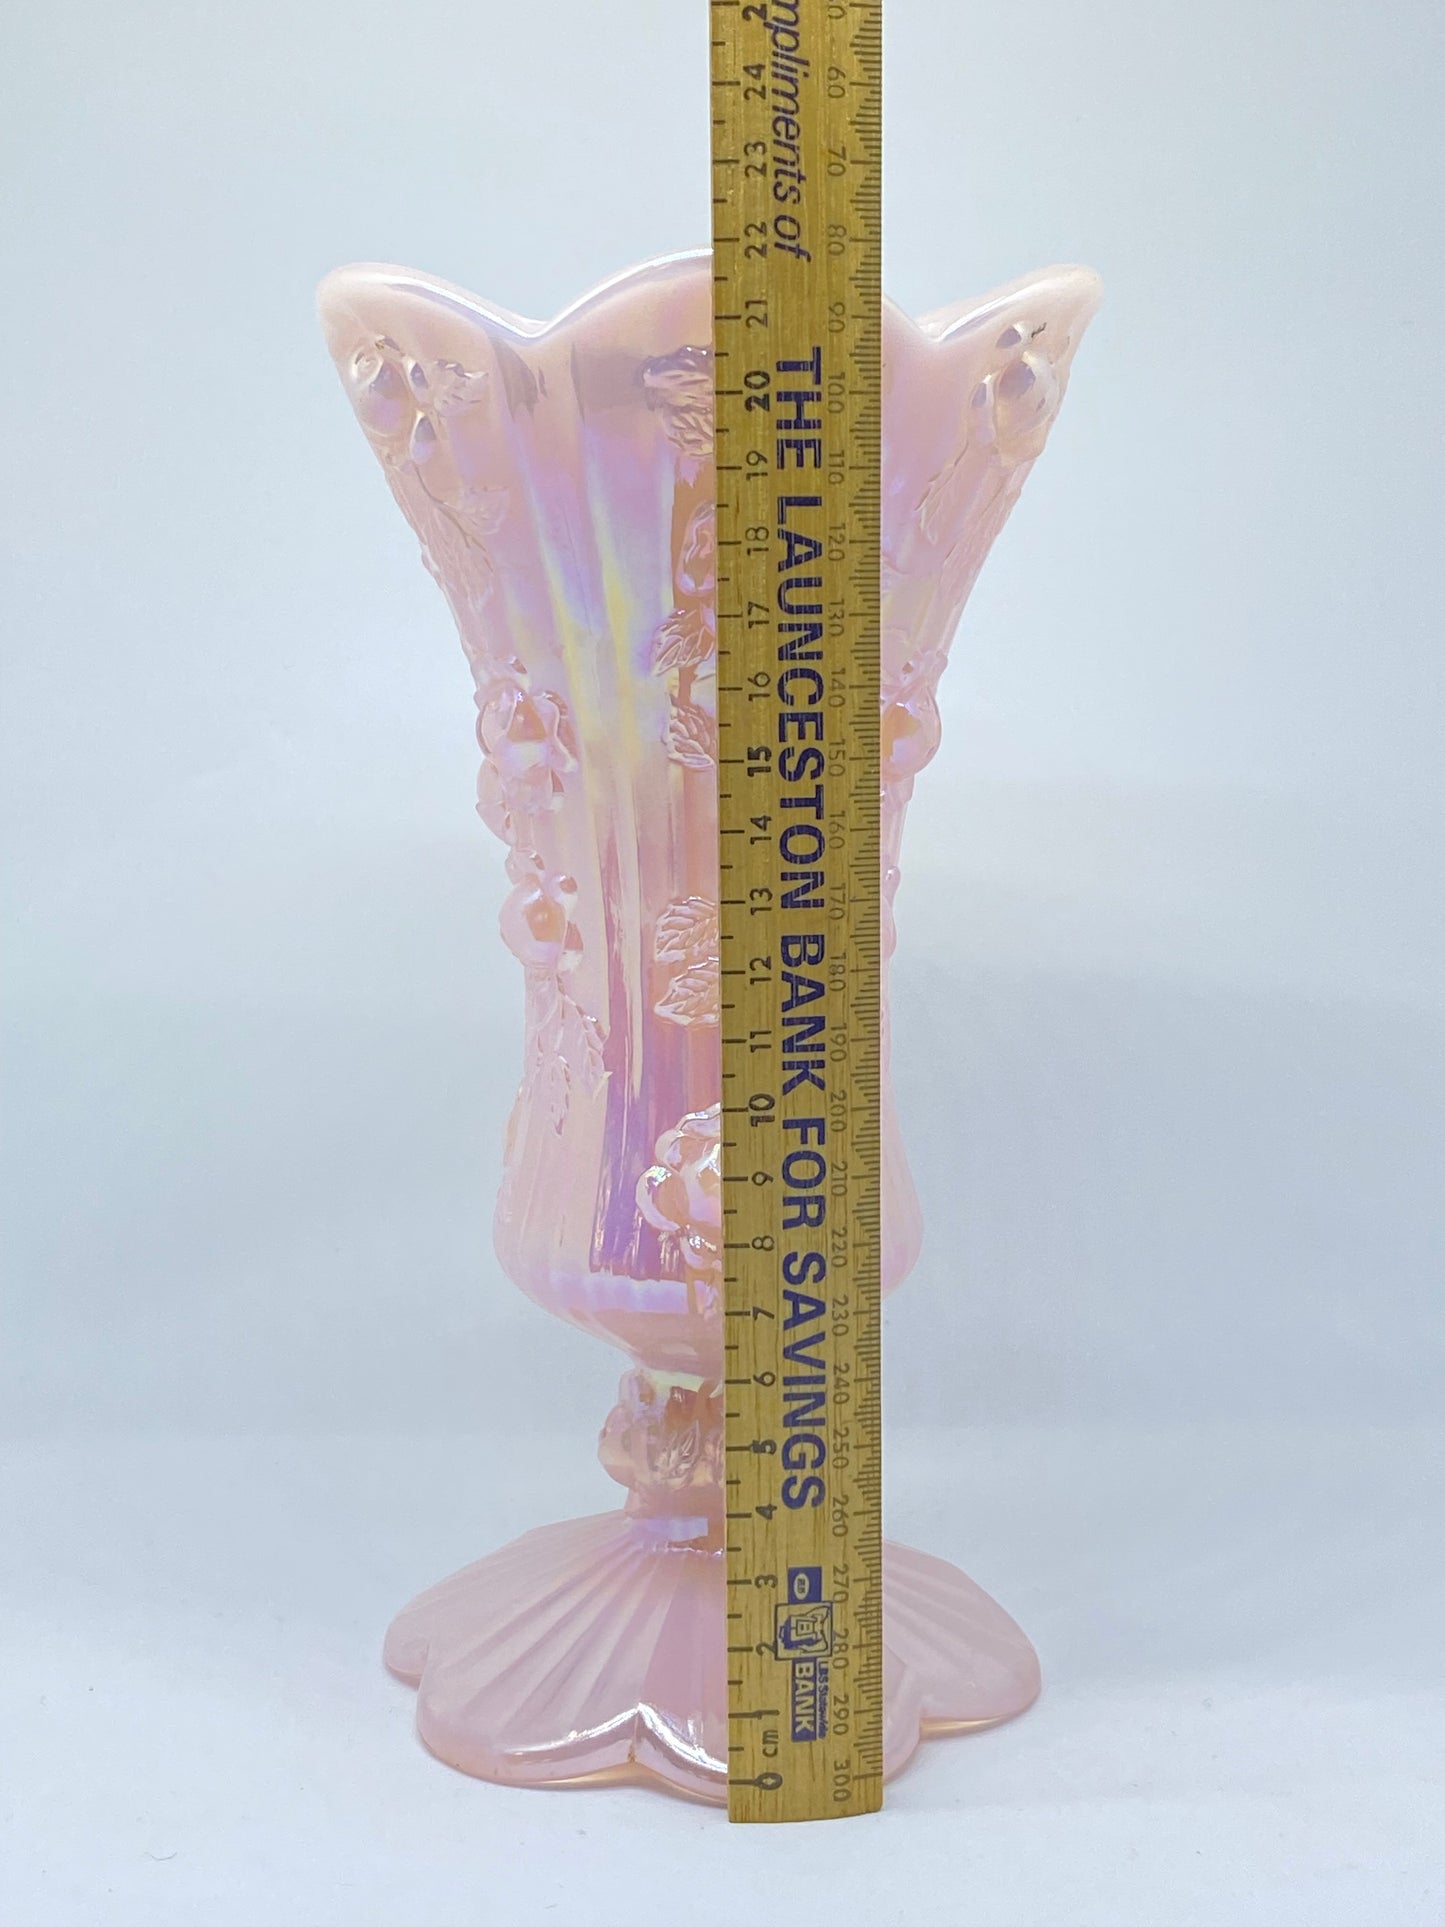 Fenton Pink Opalescent Cabbage Rose Vase - with sticker